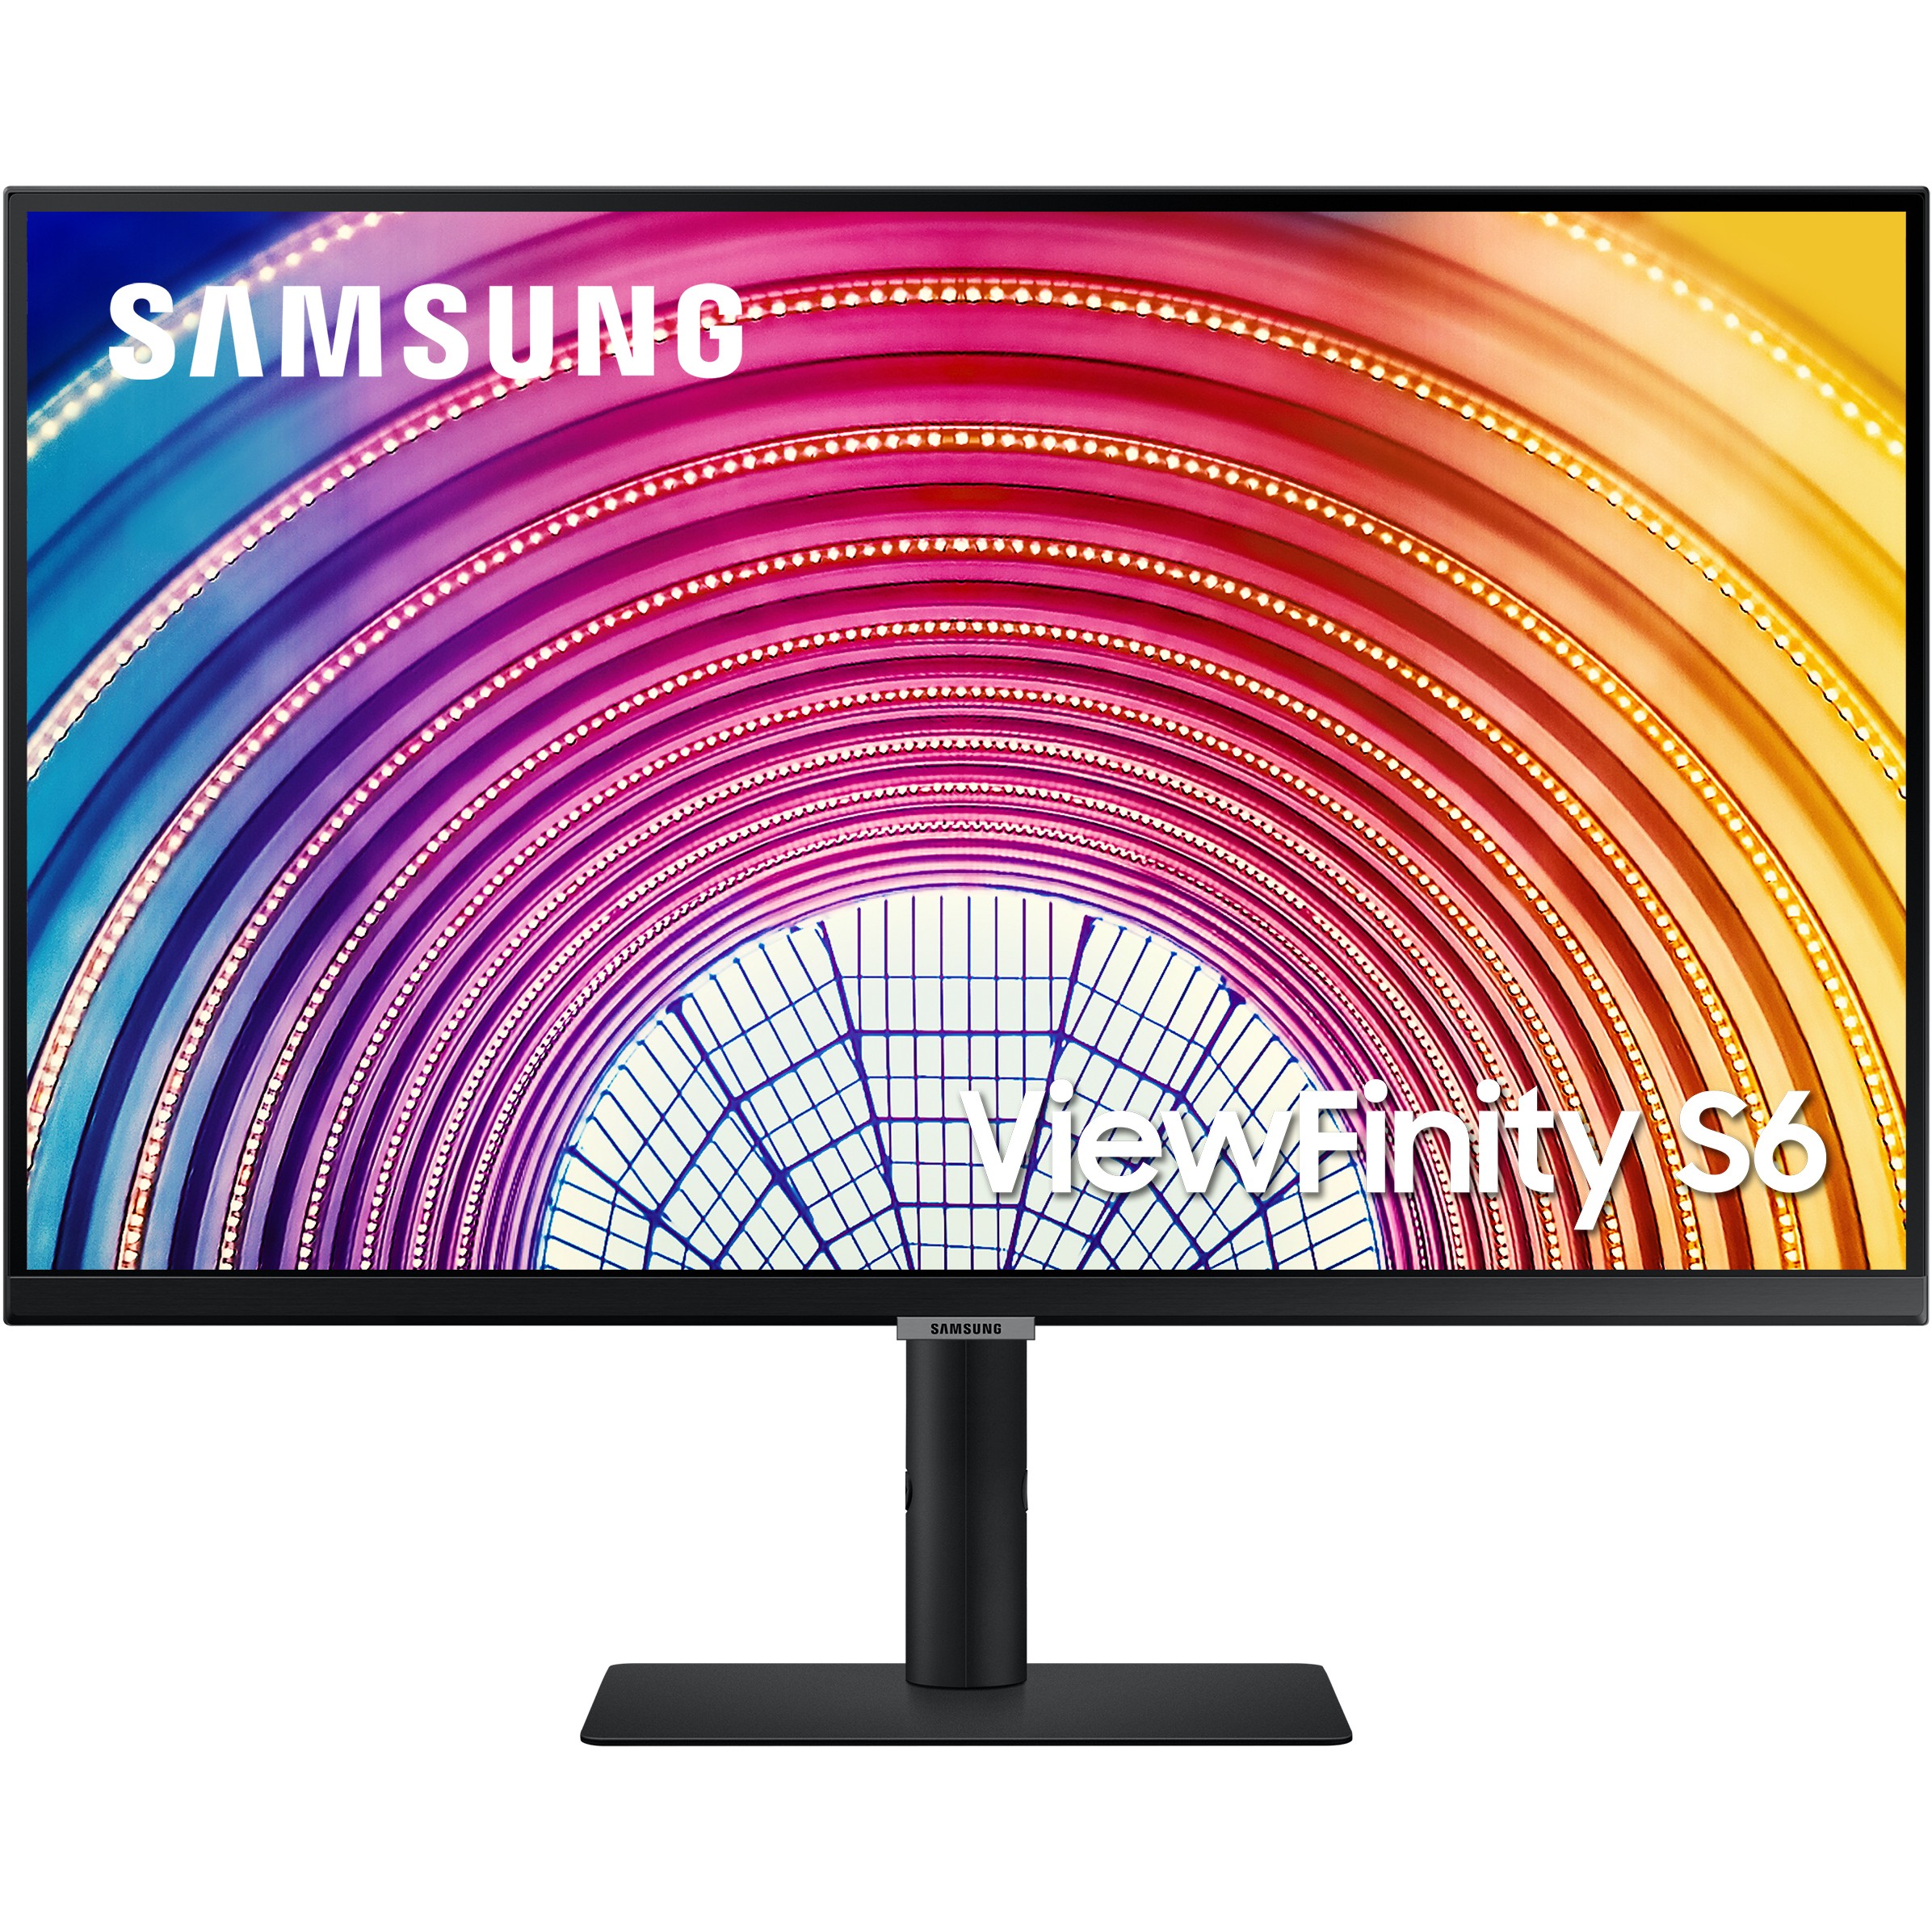 Samsung ViewFinity S60A computer monitor